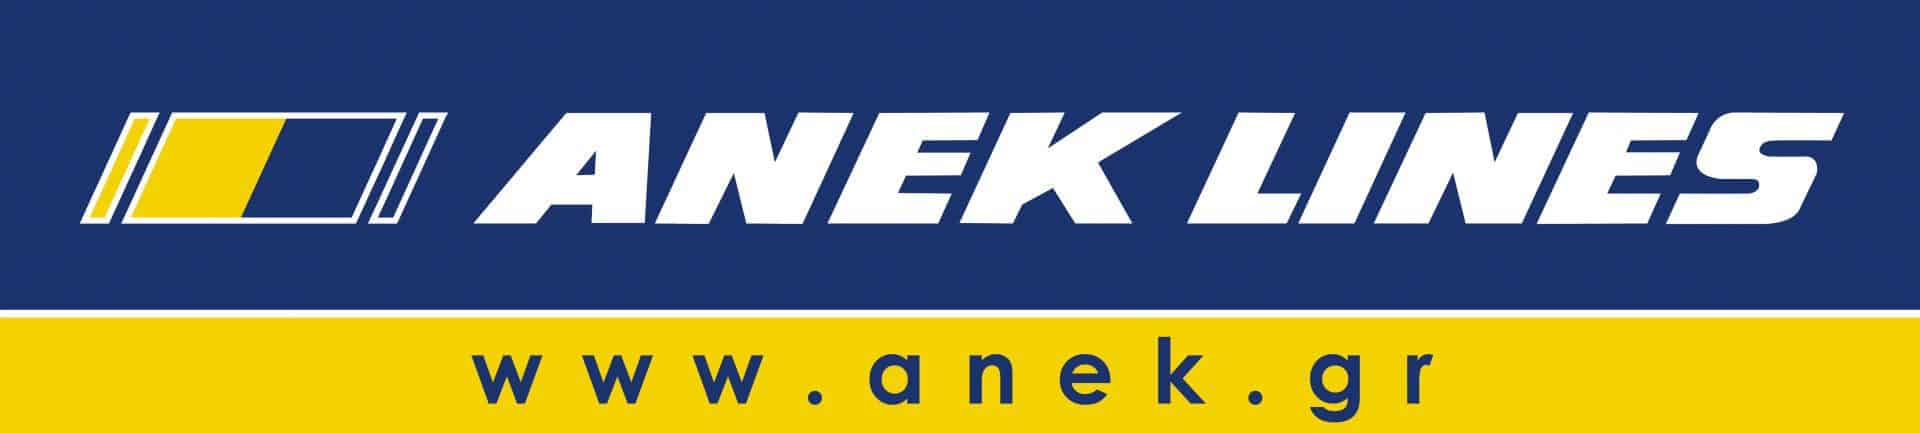 anek_lines_logo+www